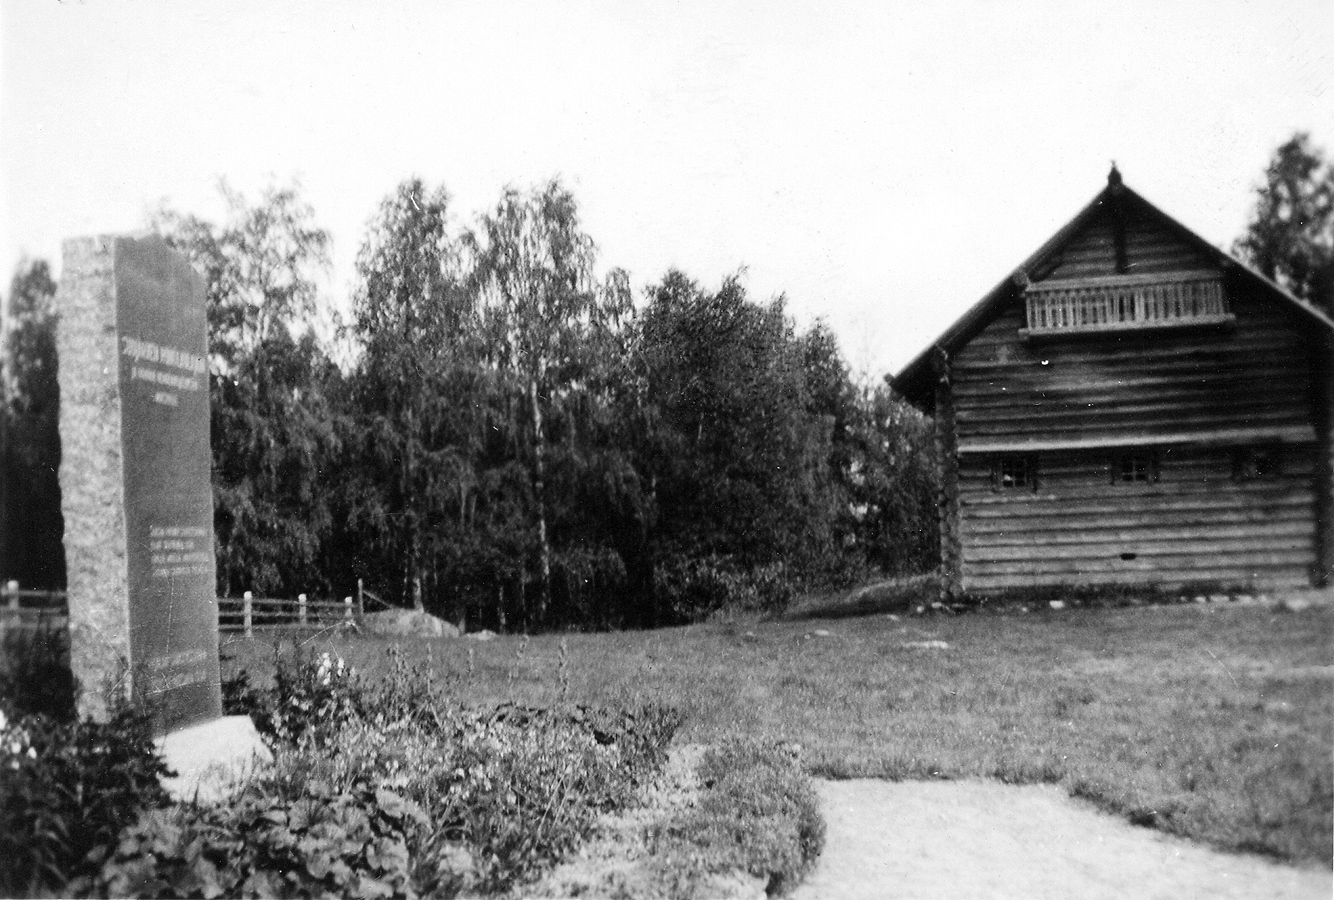 1930's. Jehkilä. Leppäniemi Local History Museum and Memorial to the Rune Singers